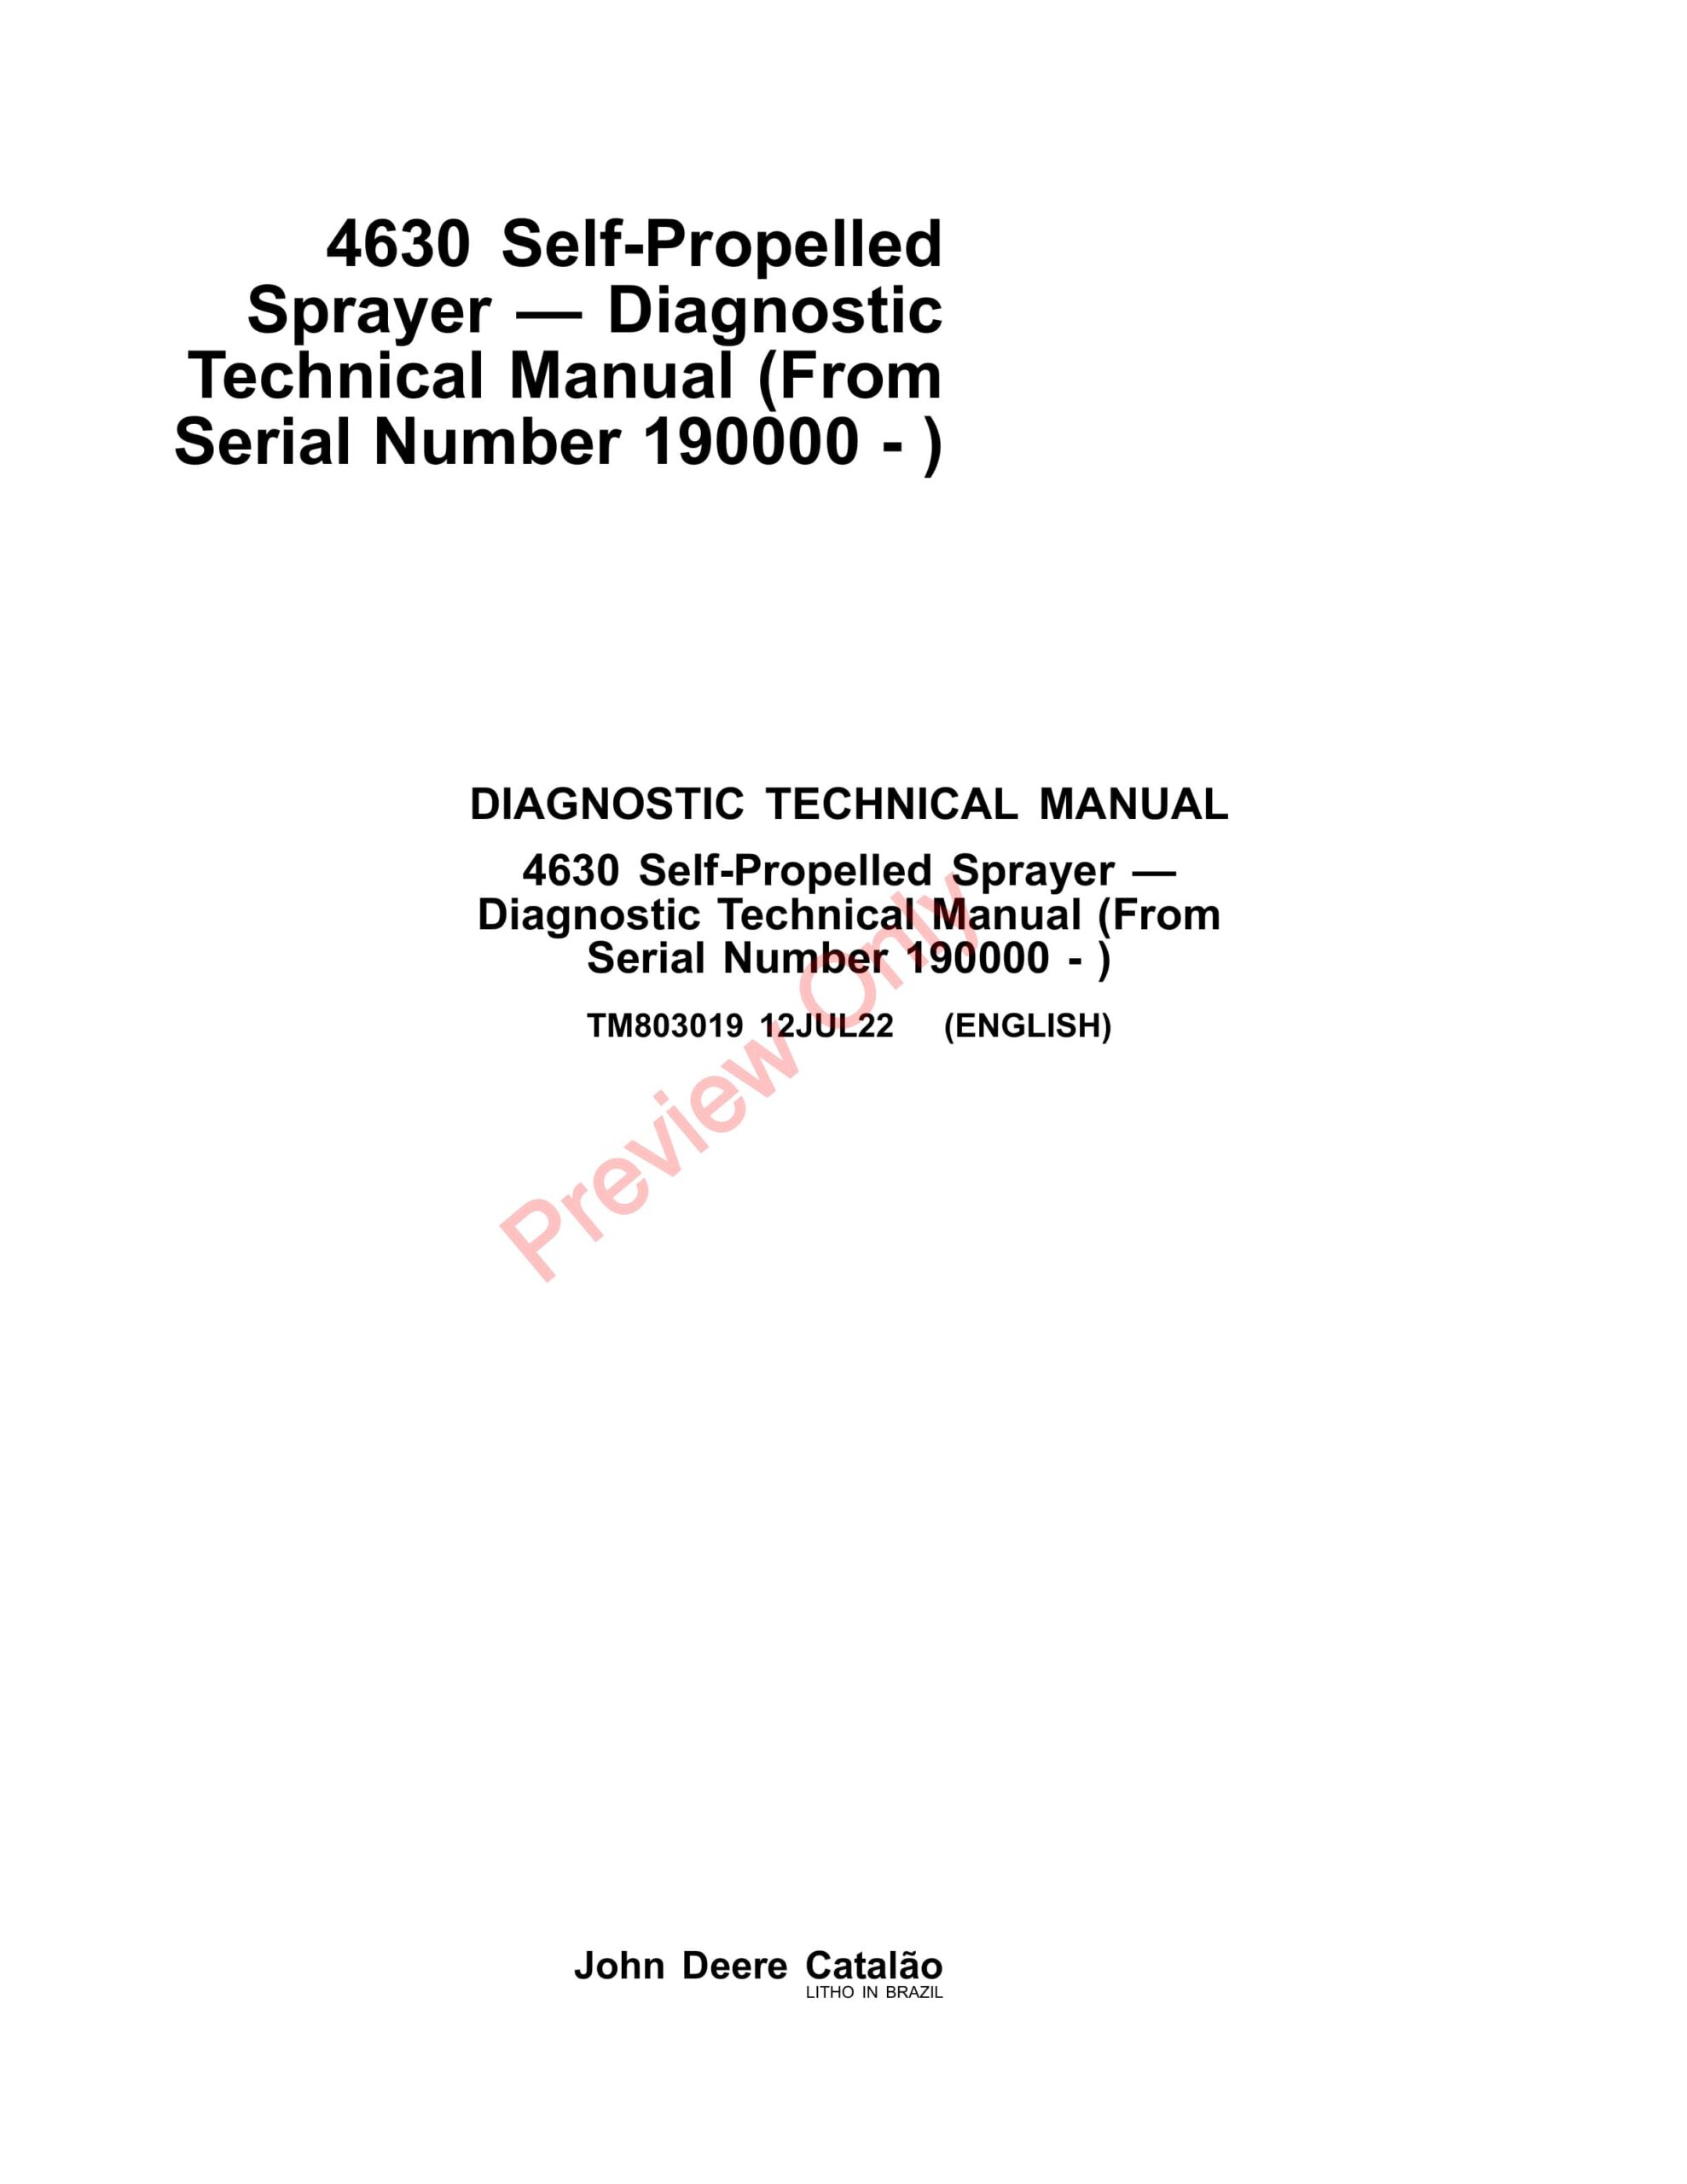 John Deere 4630 Self-propelled Sprayer Diagnostic Technical Manual TM803019 12JUL22-1